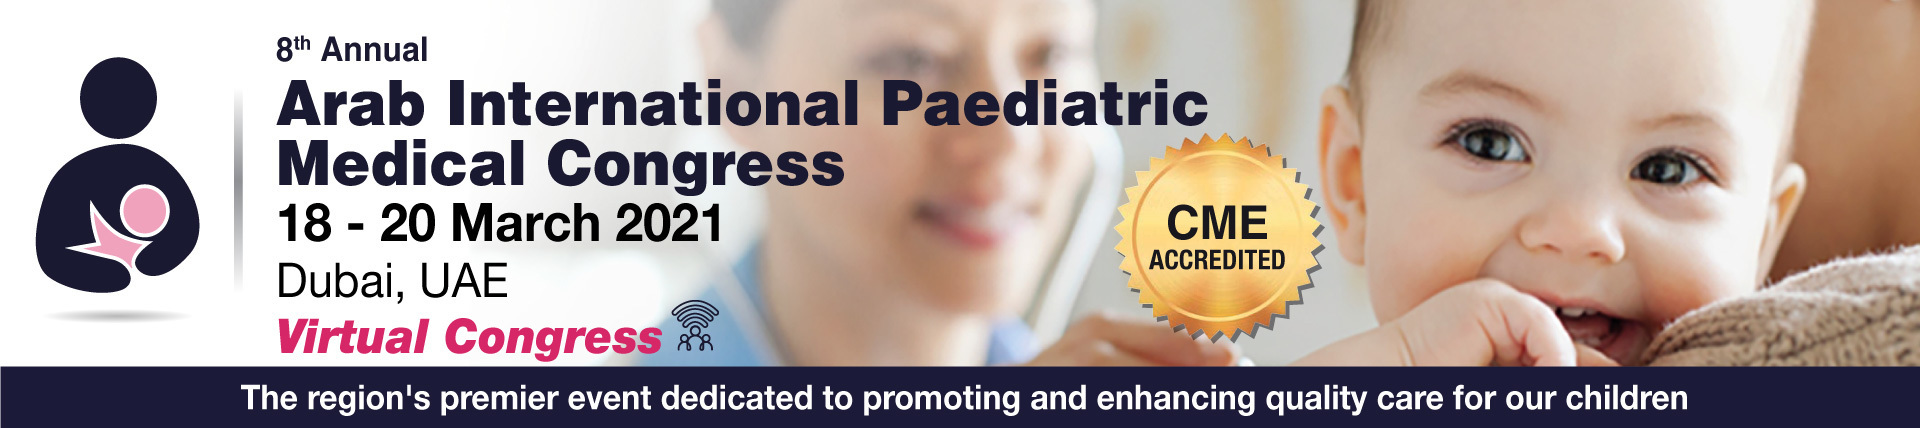 8th Annual Arab International Paediatric Medical Congress, Virtual, United Arab Emirates